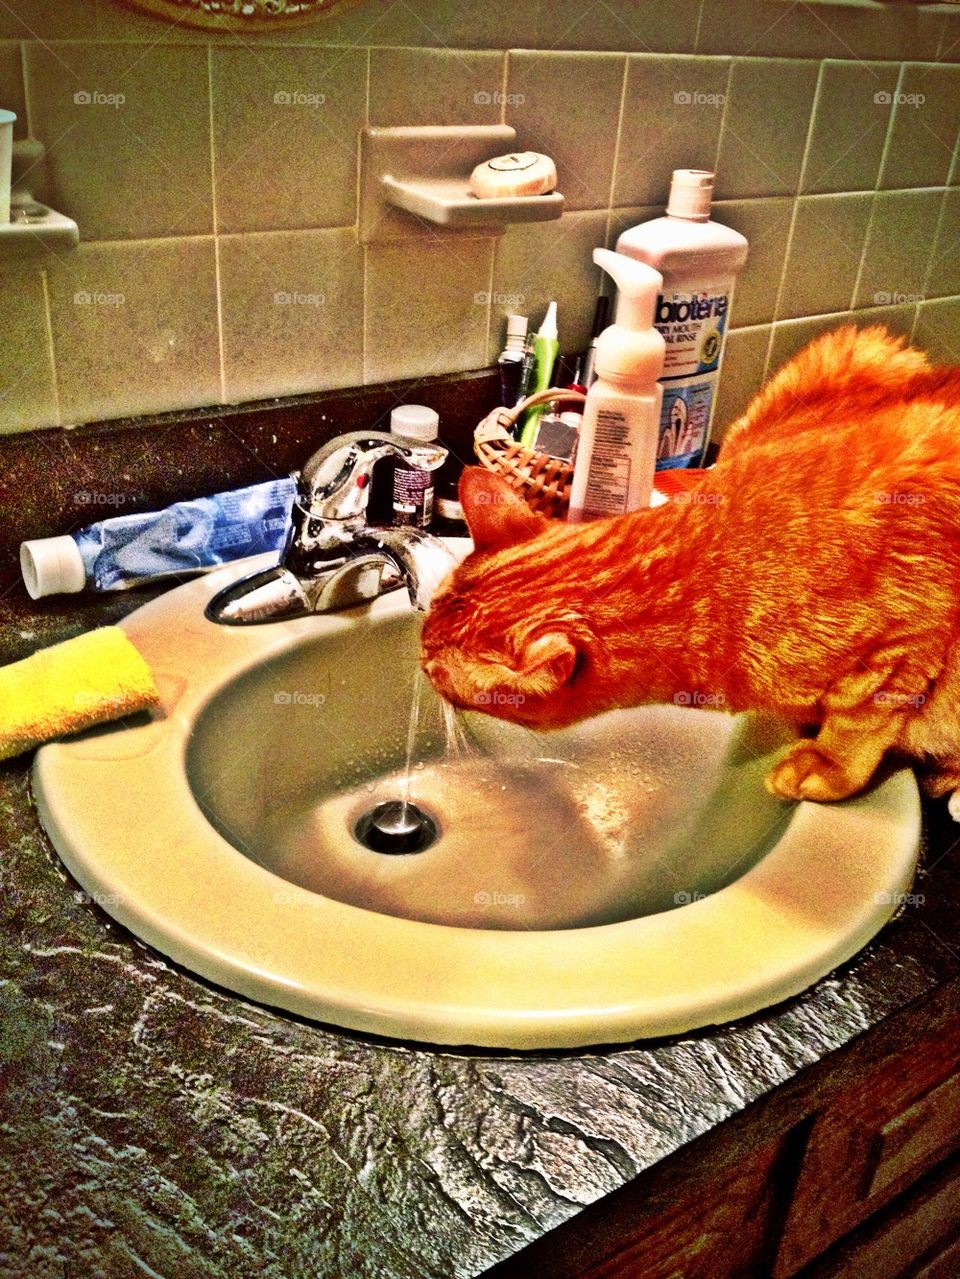 Cat Drinking Fountain